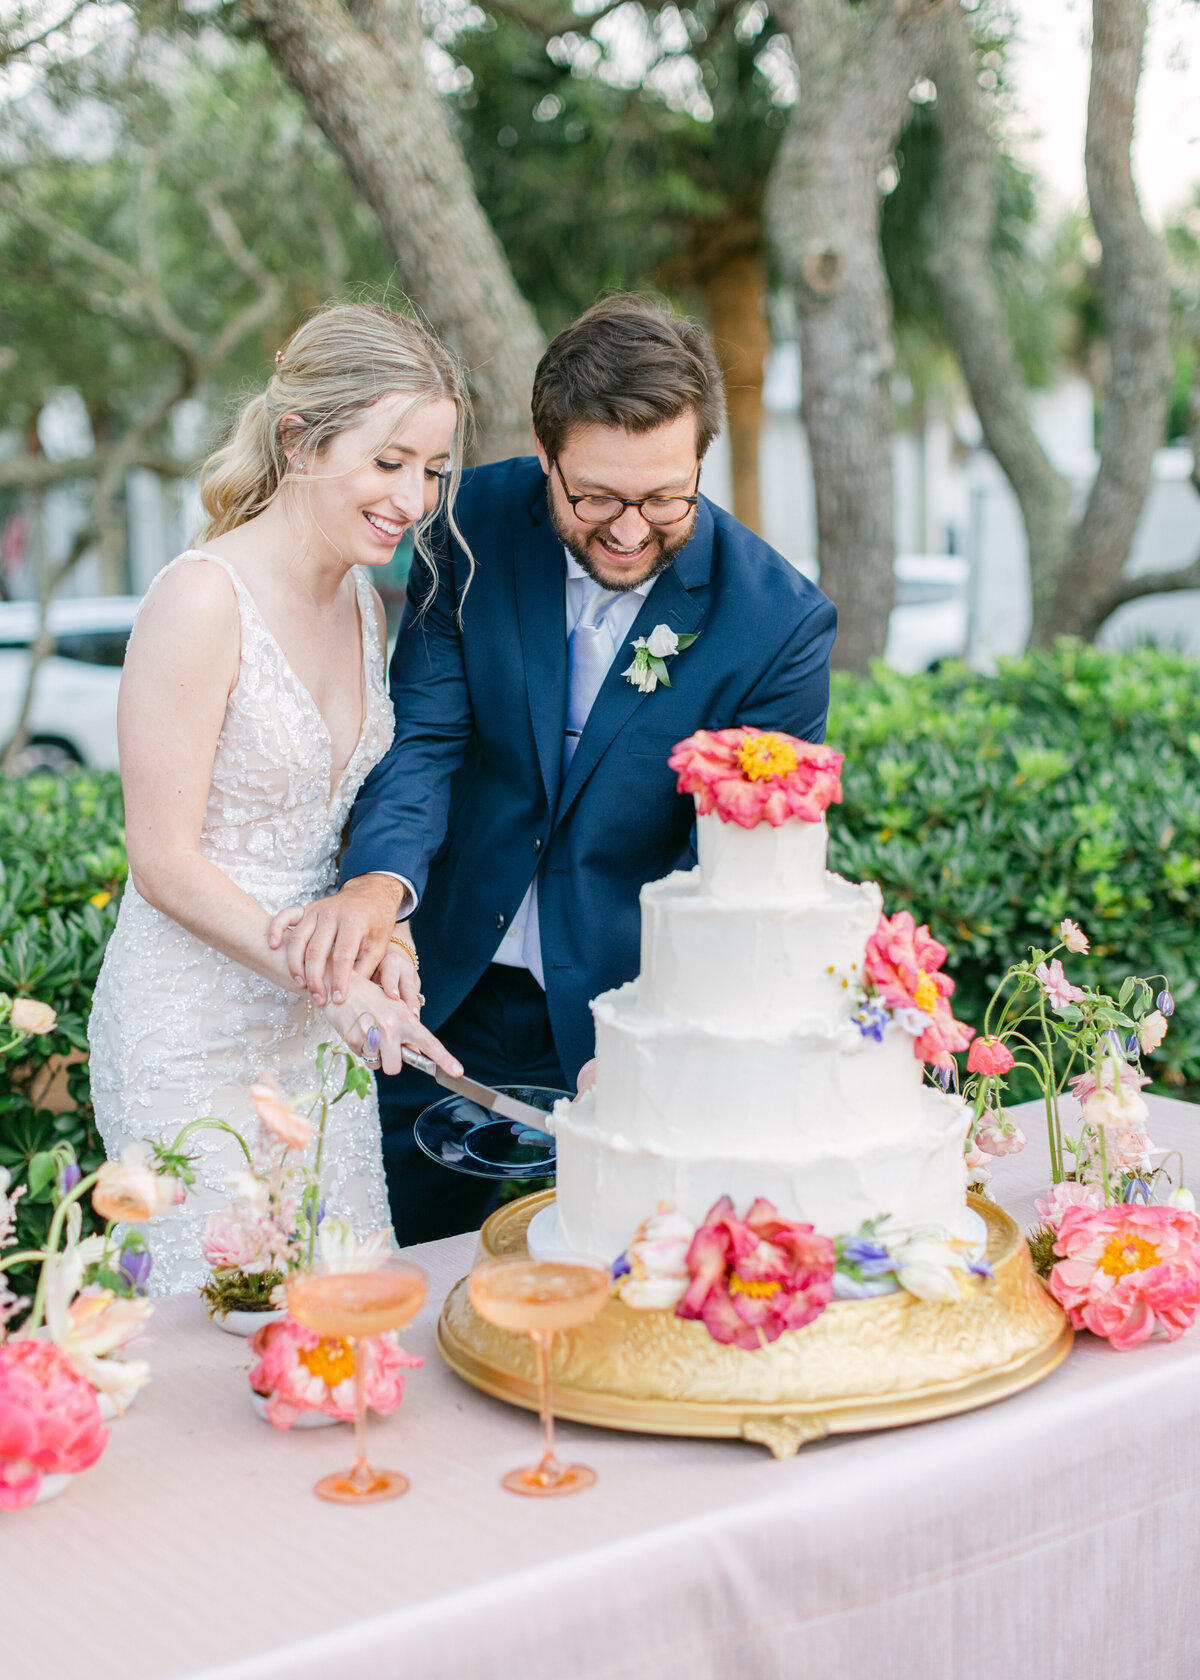 bride-groom-cutting-white-wedding-cake-blush-table